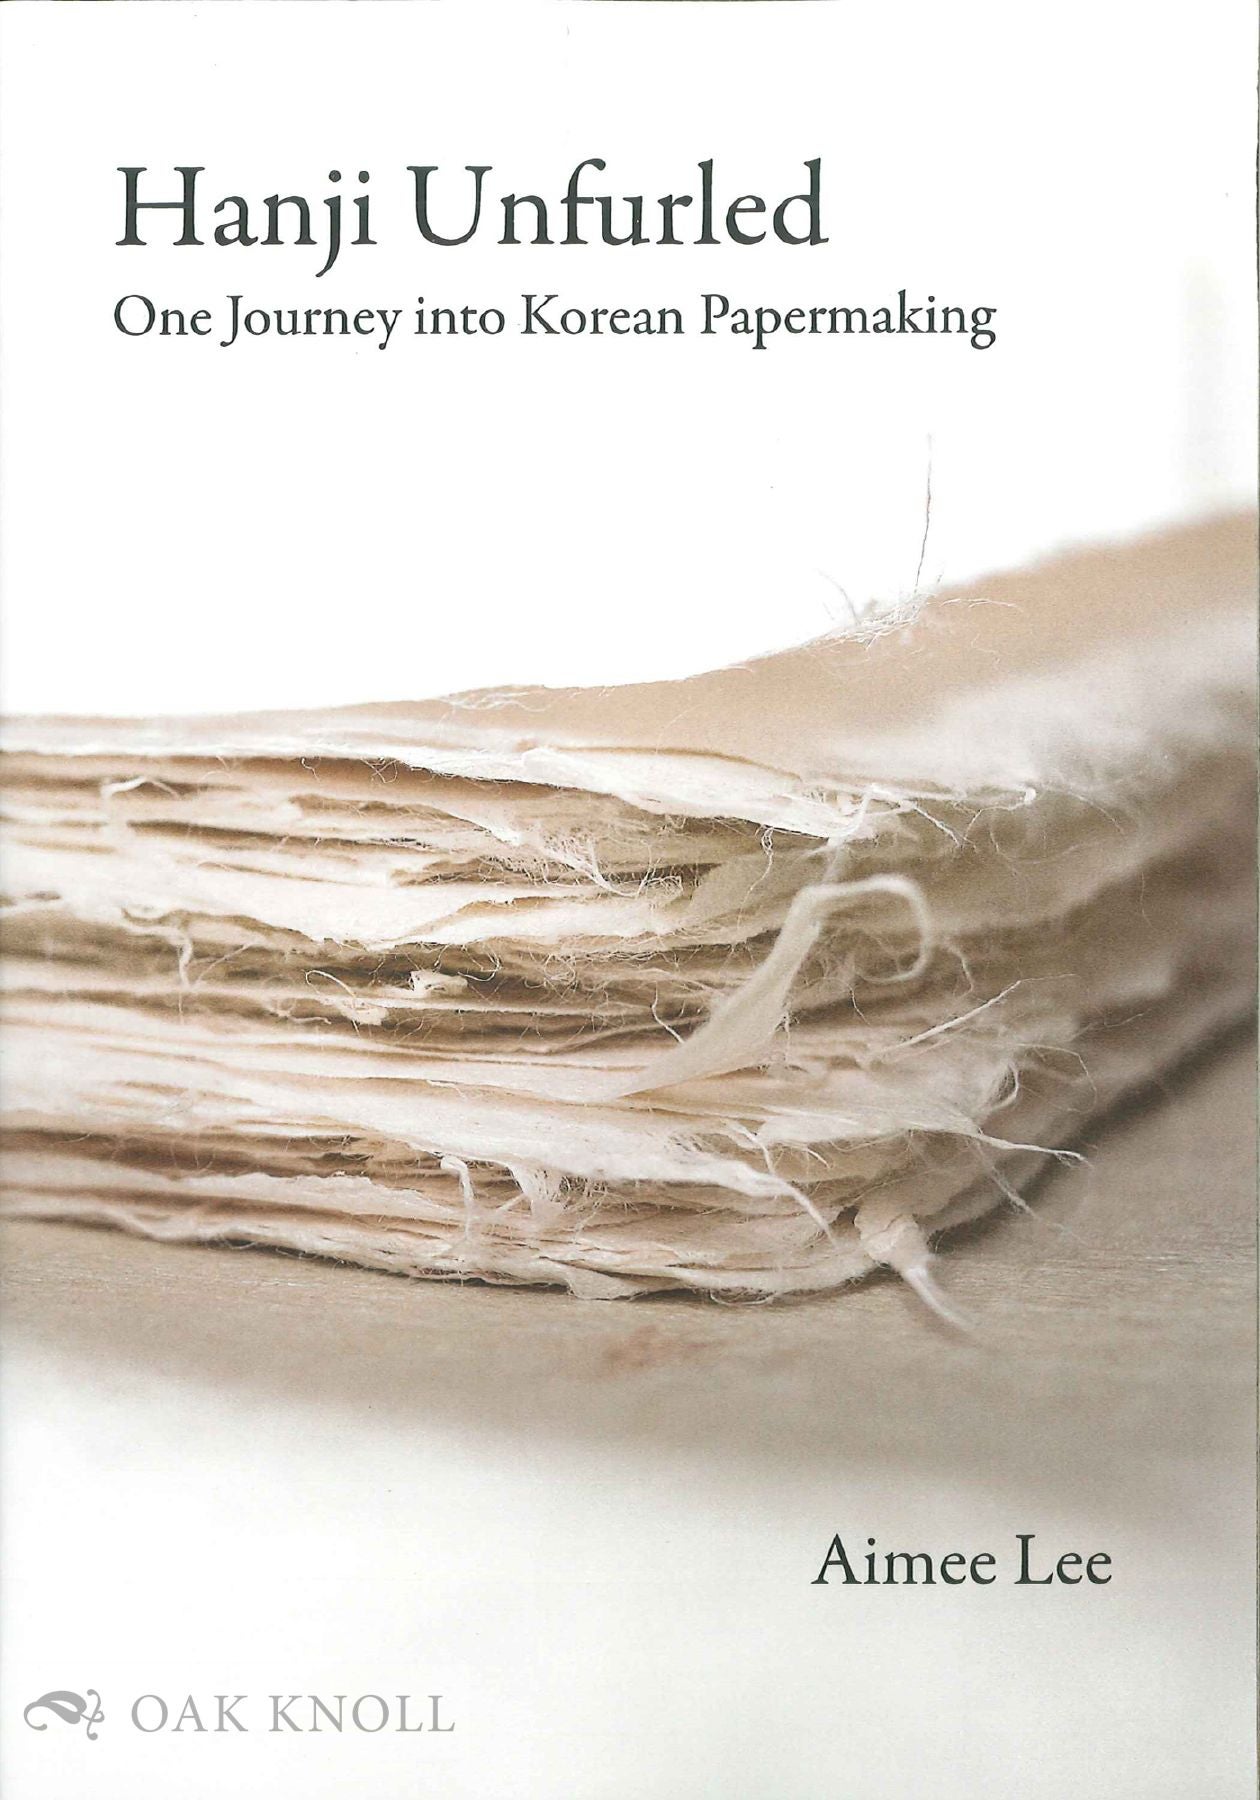 HANJI UNFURLED: ONE JOURNEY INTO KOREAN PAPERMAKING